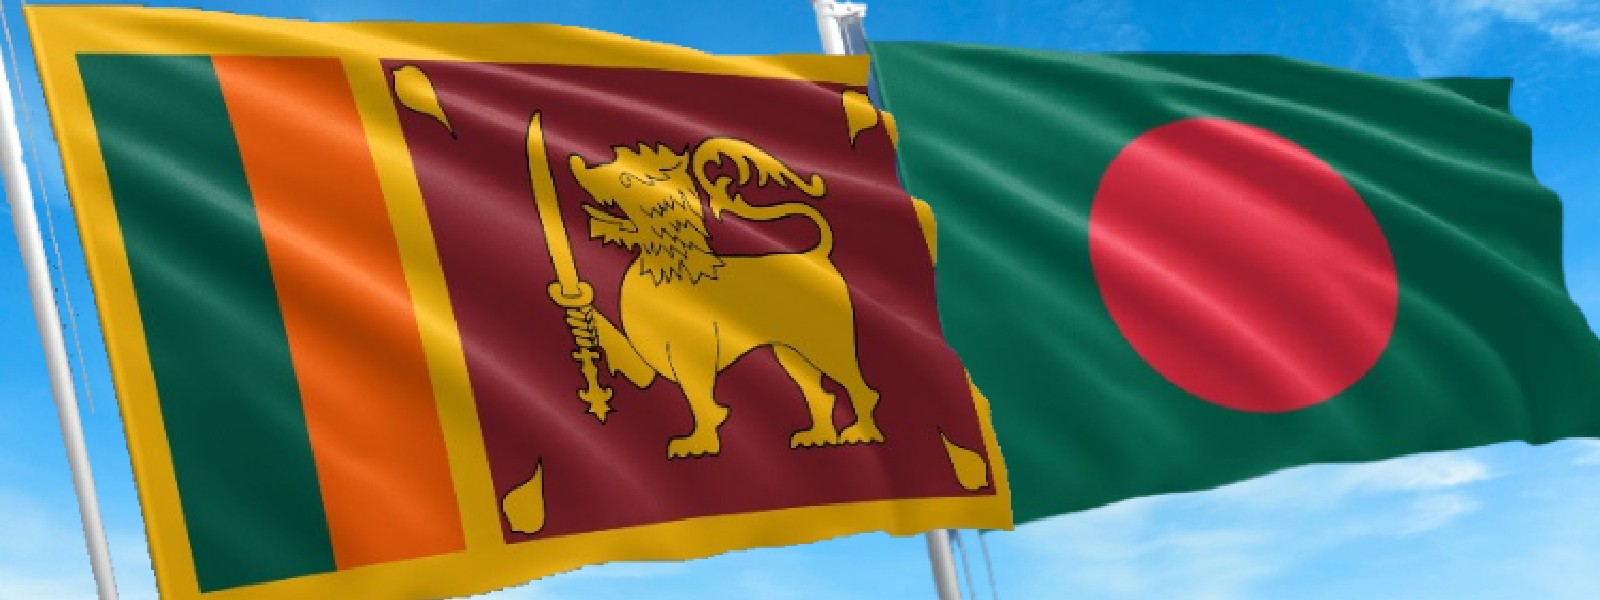 Sri Lanka given more time to repay Bangladesh loan